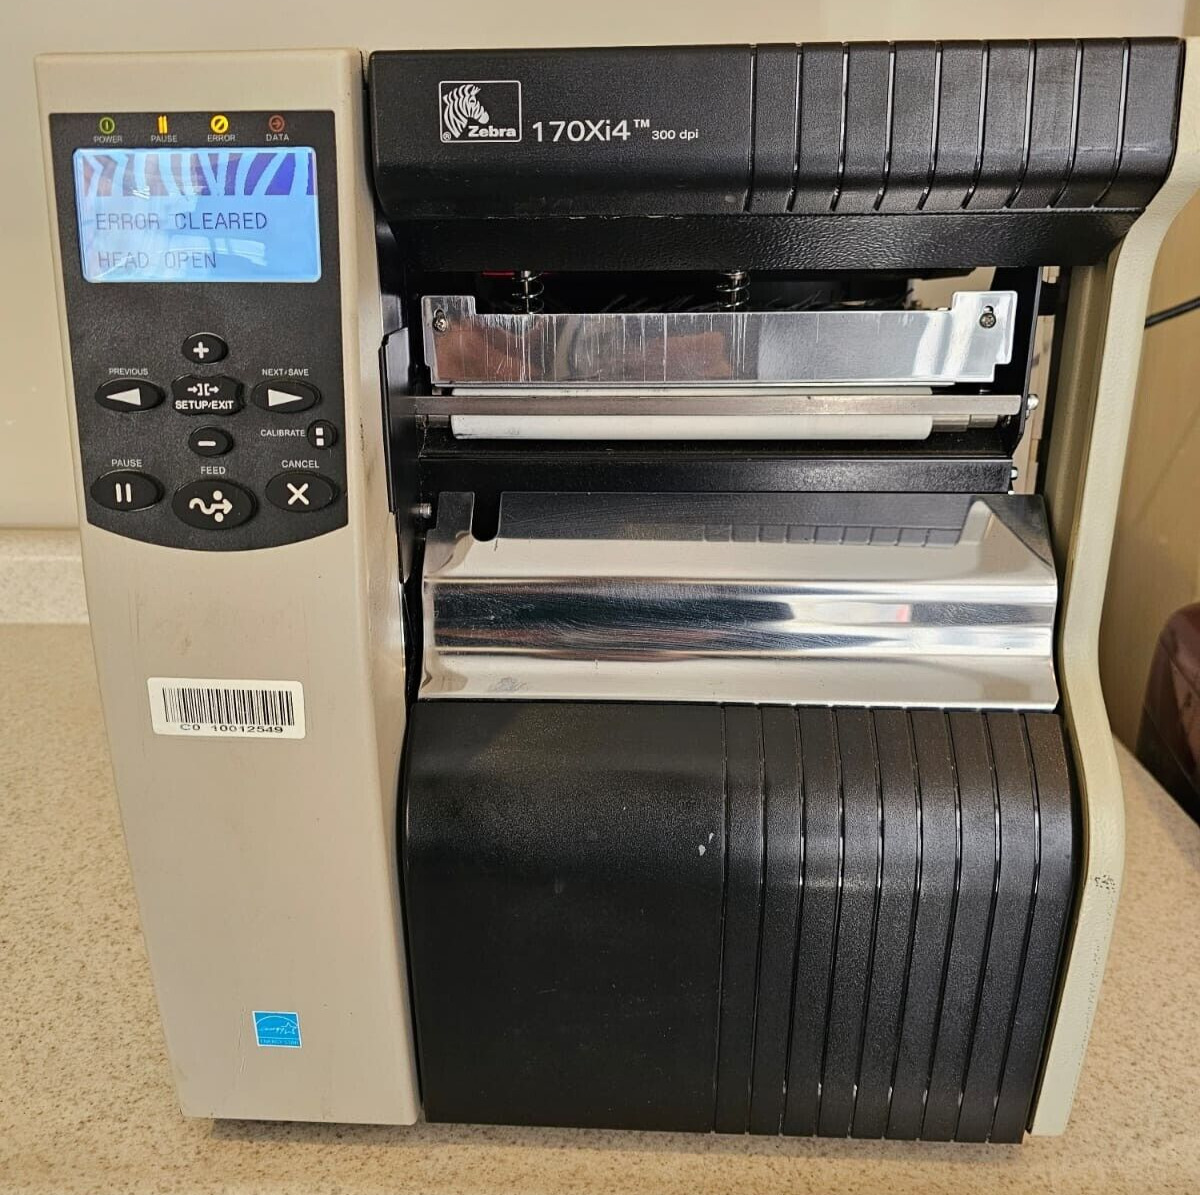 Zebra 170Xi4 Wide Thermal Transfer Label Printer 300 dpi LAN Untested